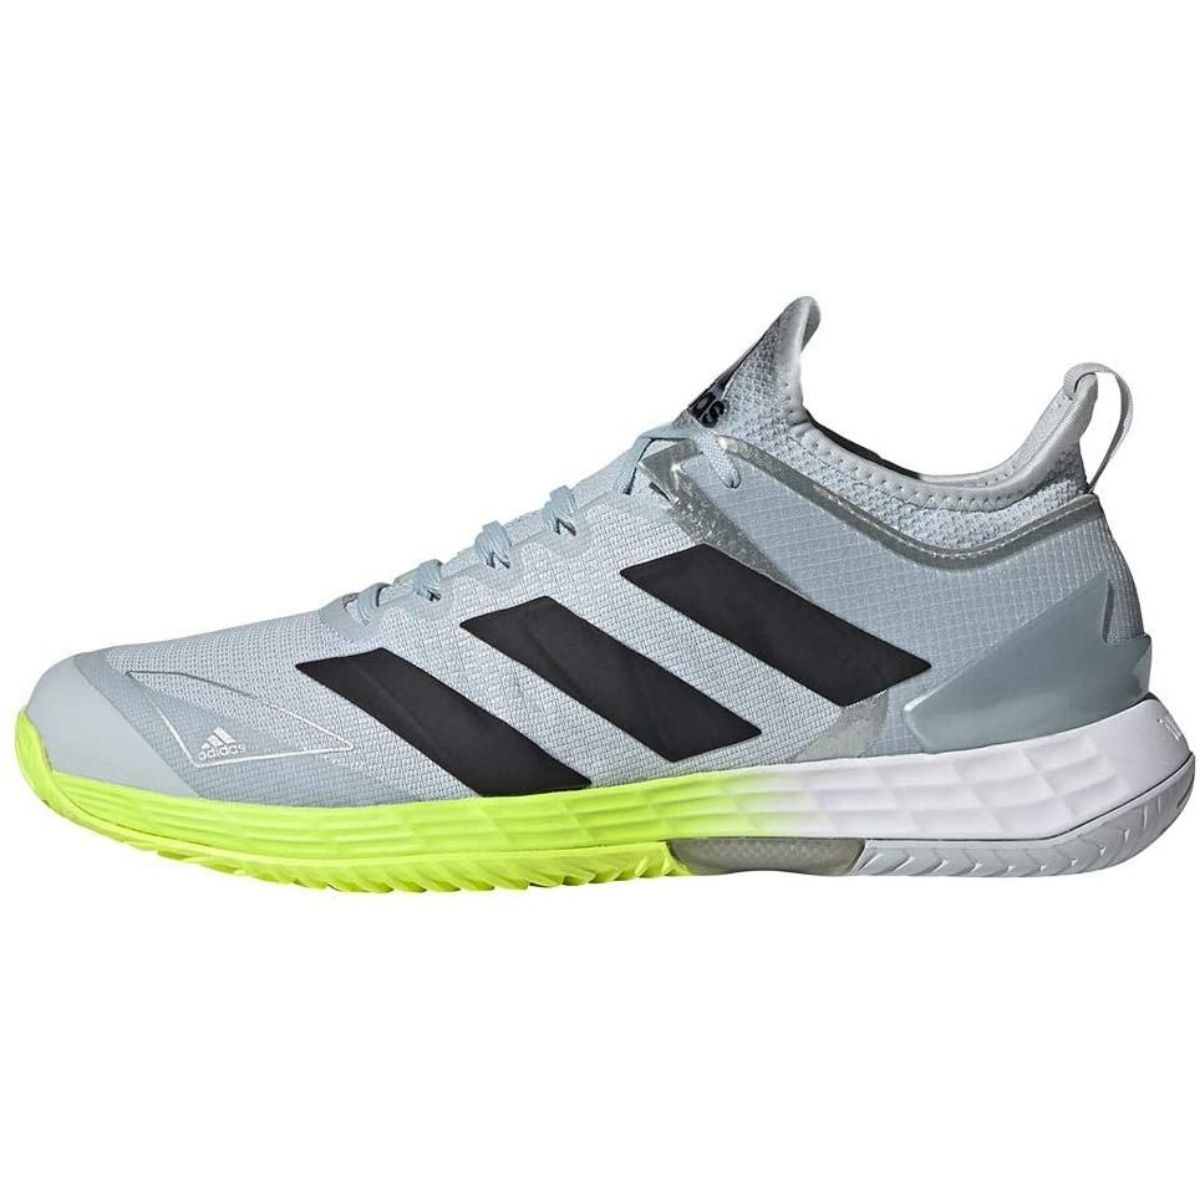 The Best Tennis Shoes Options: Adidas Adizero Ubersonic 4